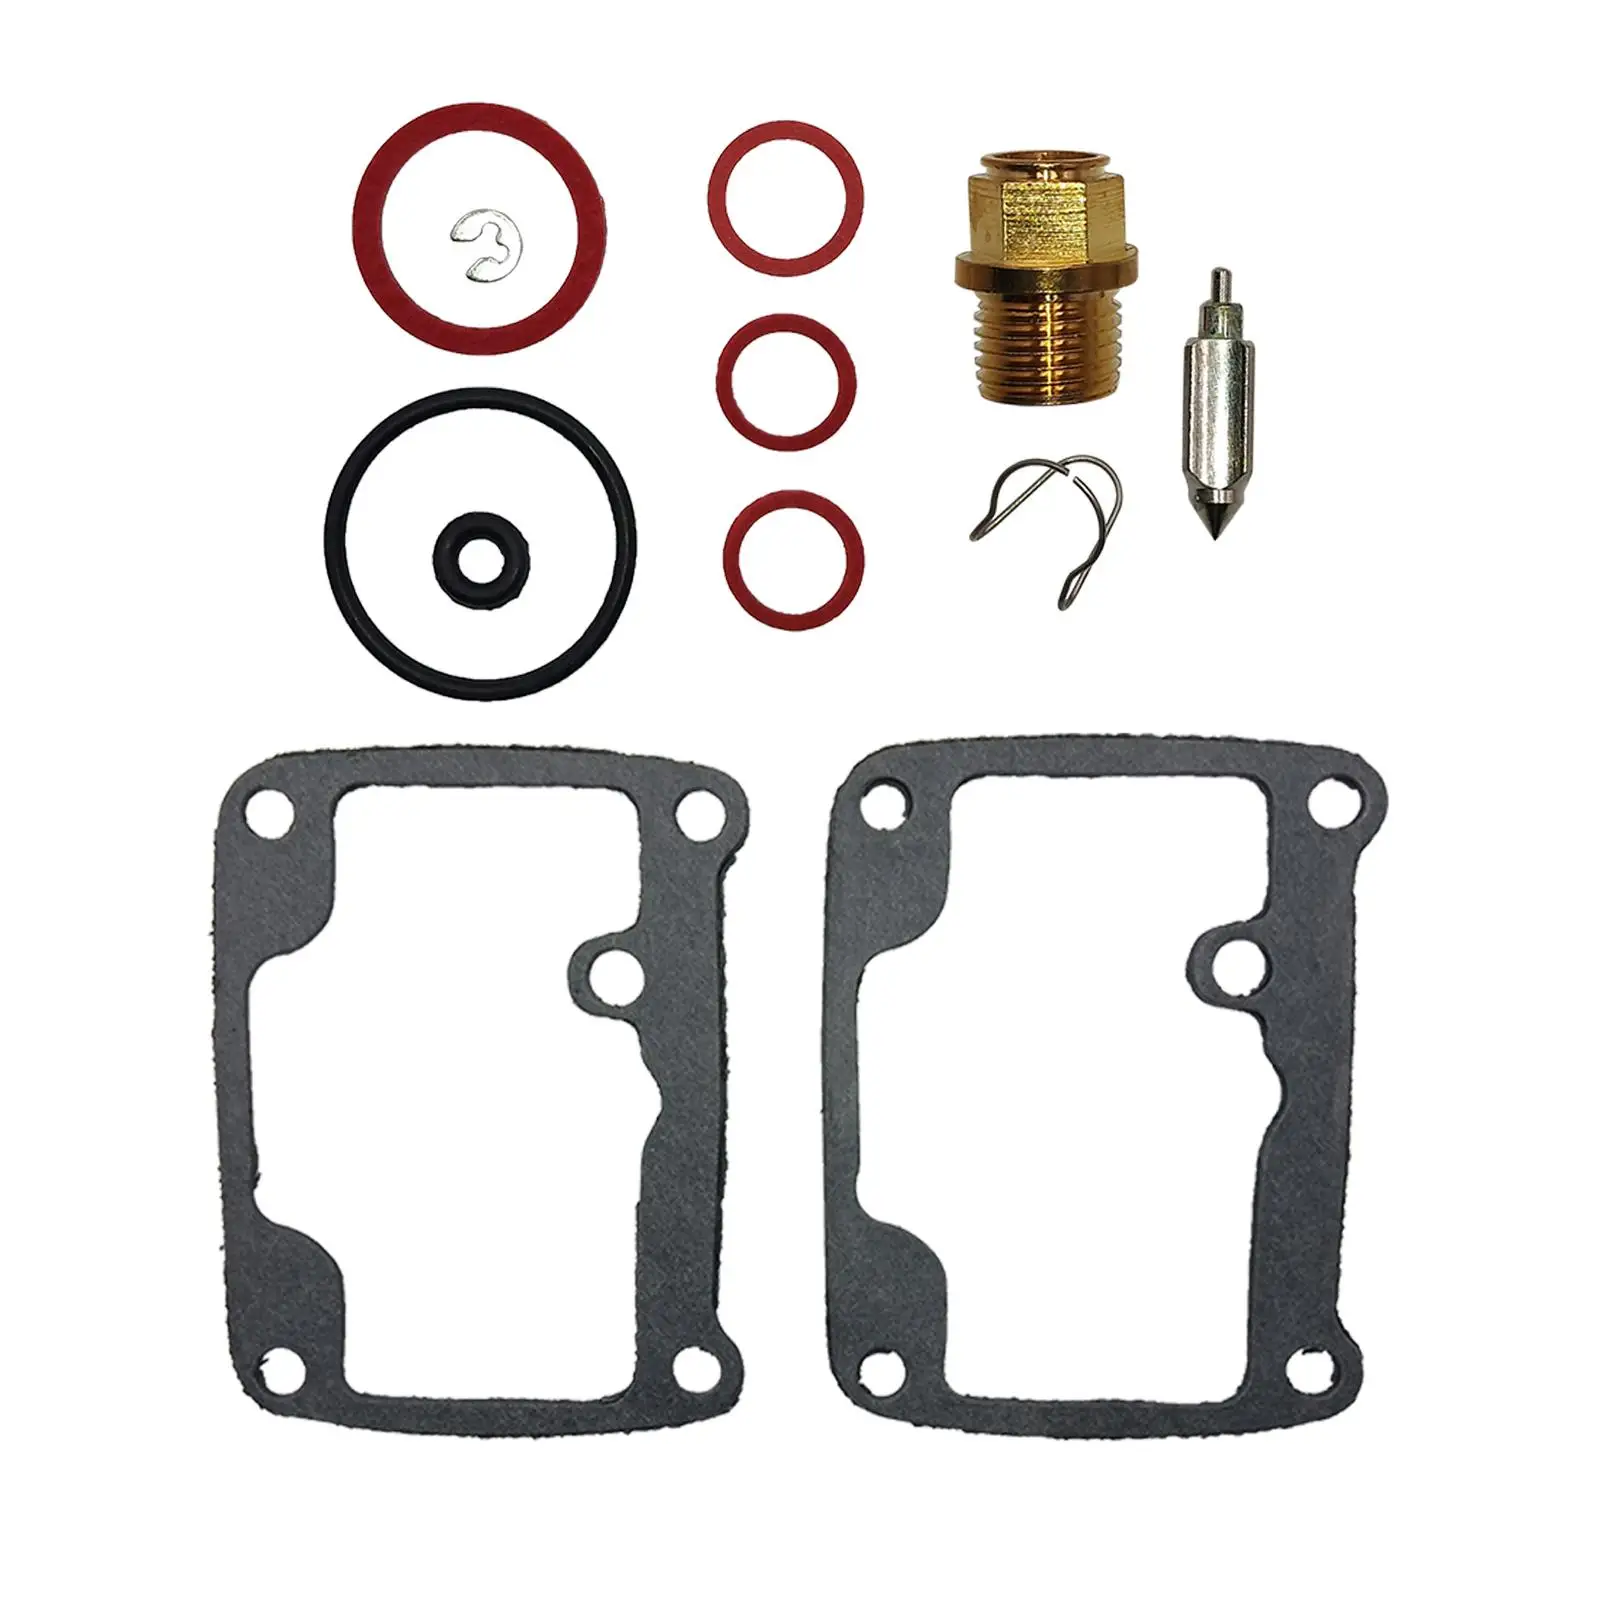 Carburetor Rebuild Kit for vm 30 32 34 Accessories Easy to Install